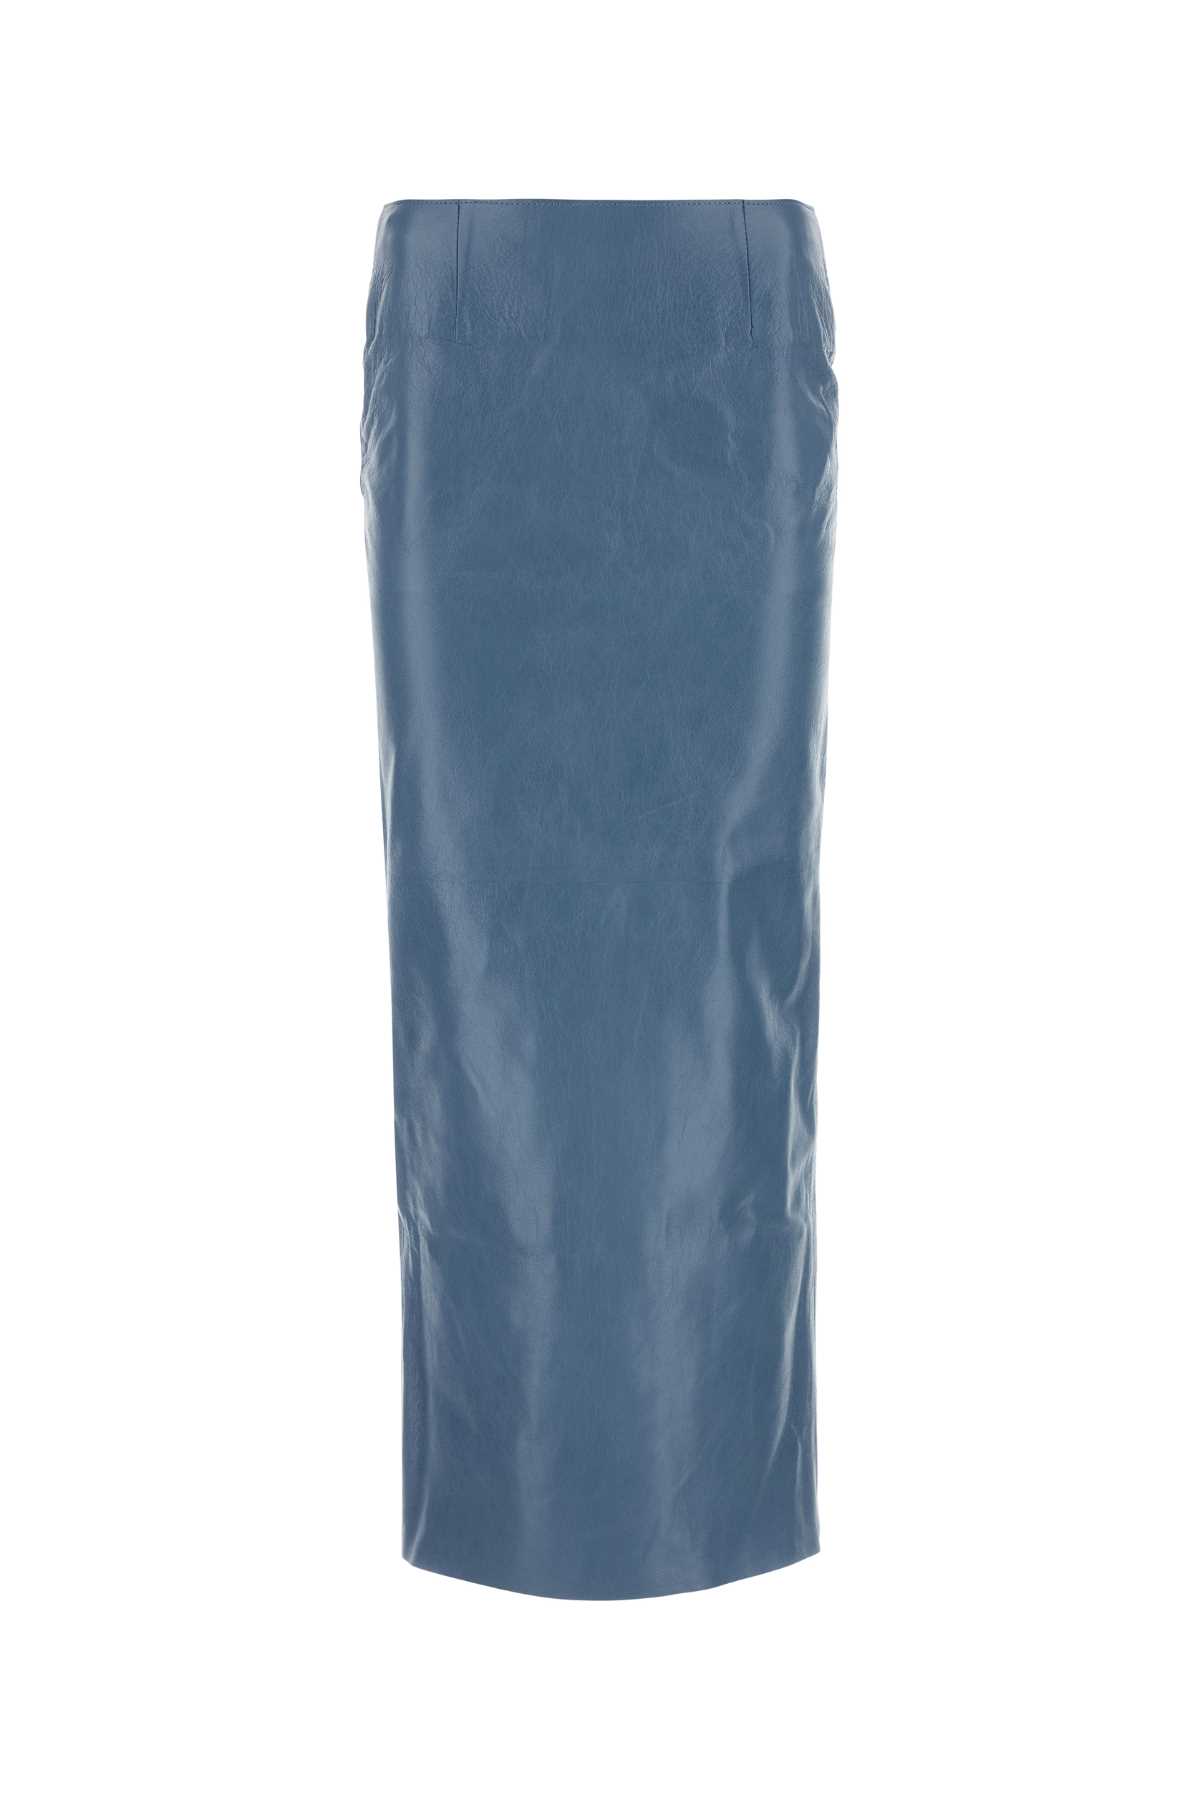 Cerulean Blue Leather Skirt